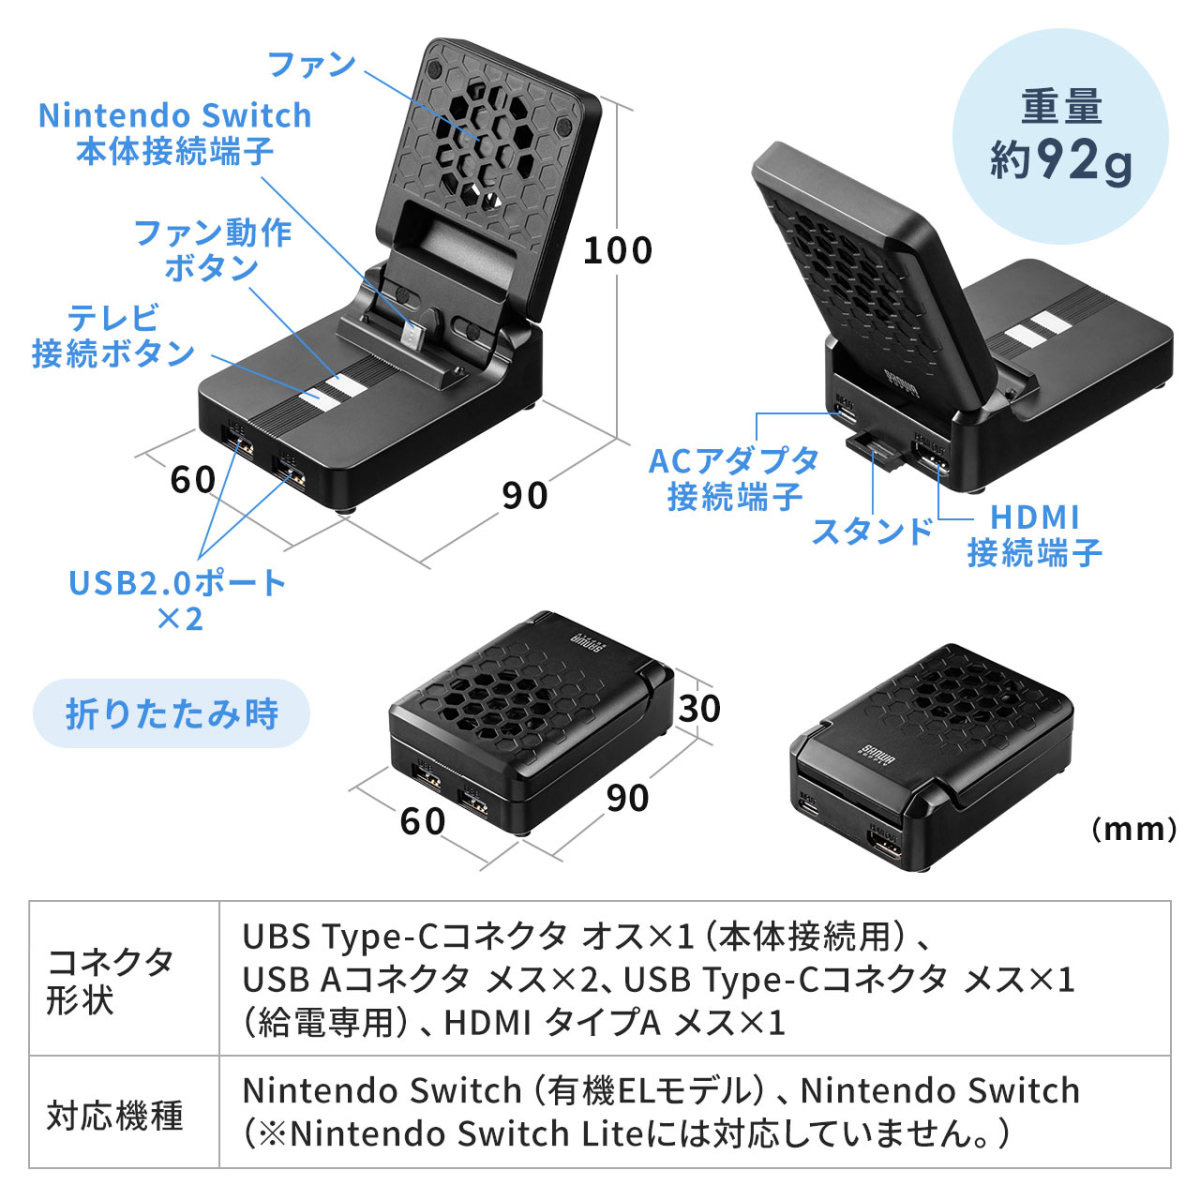 Nintendo Switch 充電 スタンド 折りたたみ ニンテンドー Switchドッグ 